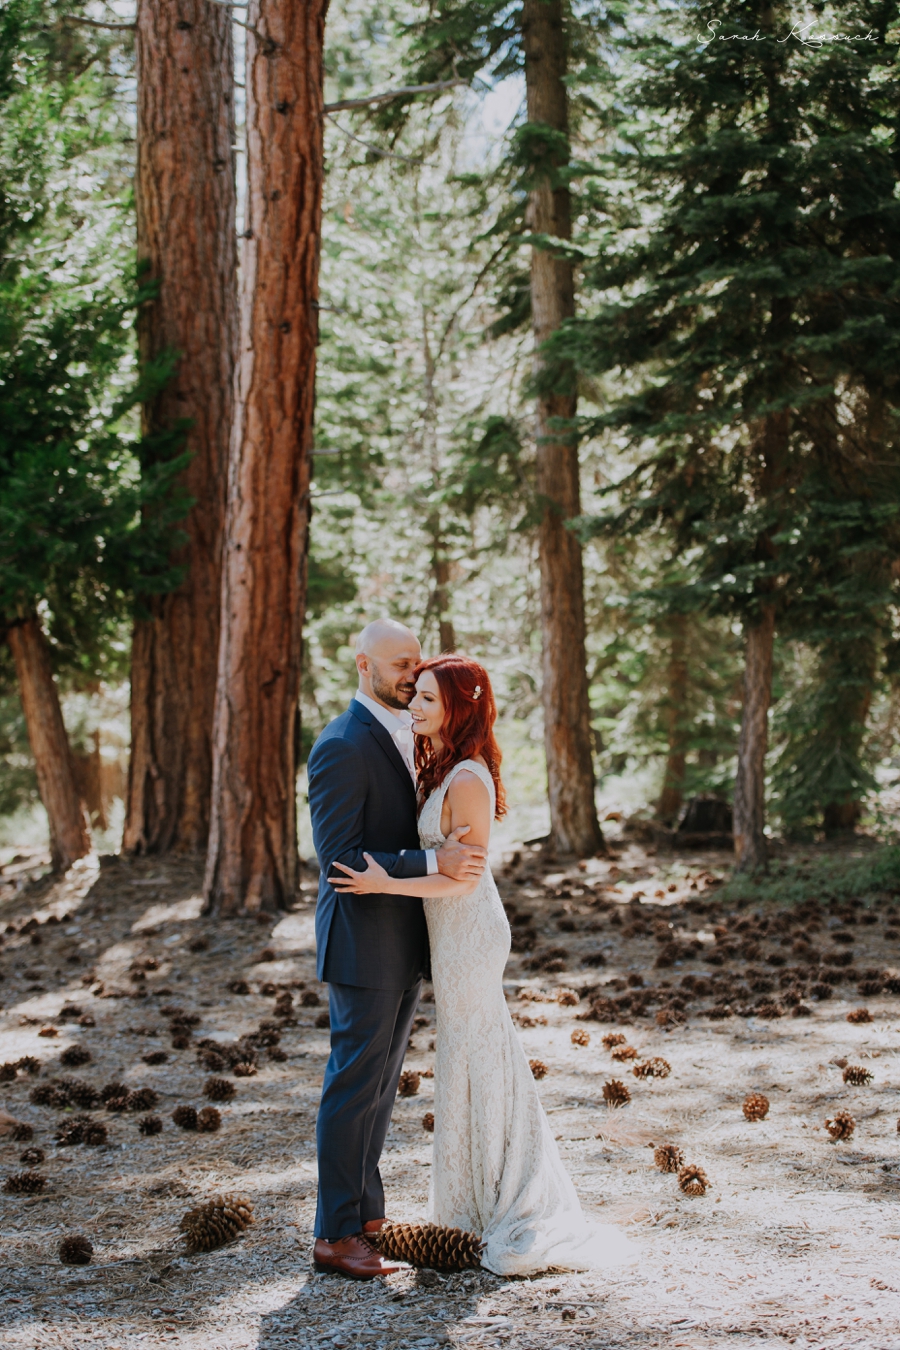 North Lake Tahoe Tahoe Vista California Wedding 0718 | Sarah Kossuch Photography